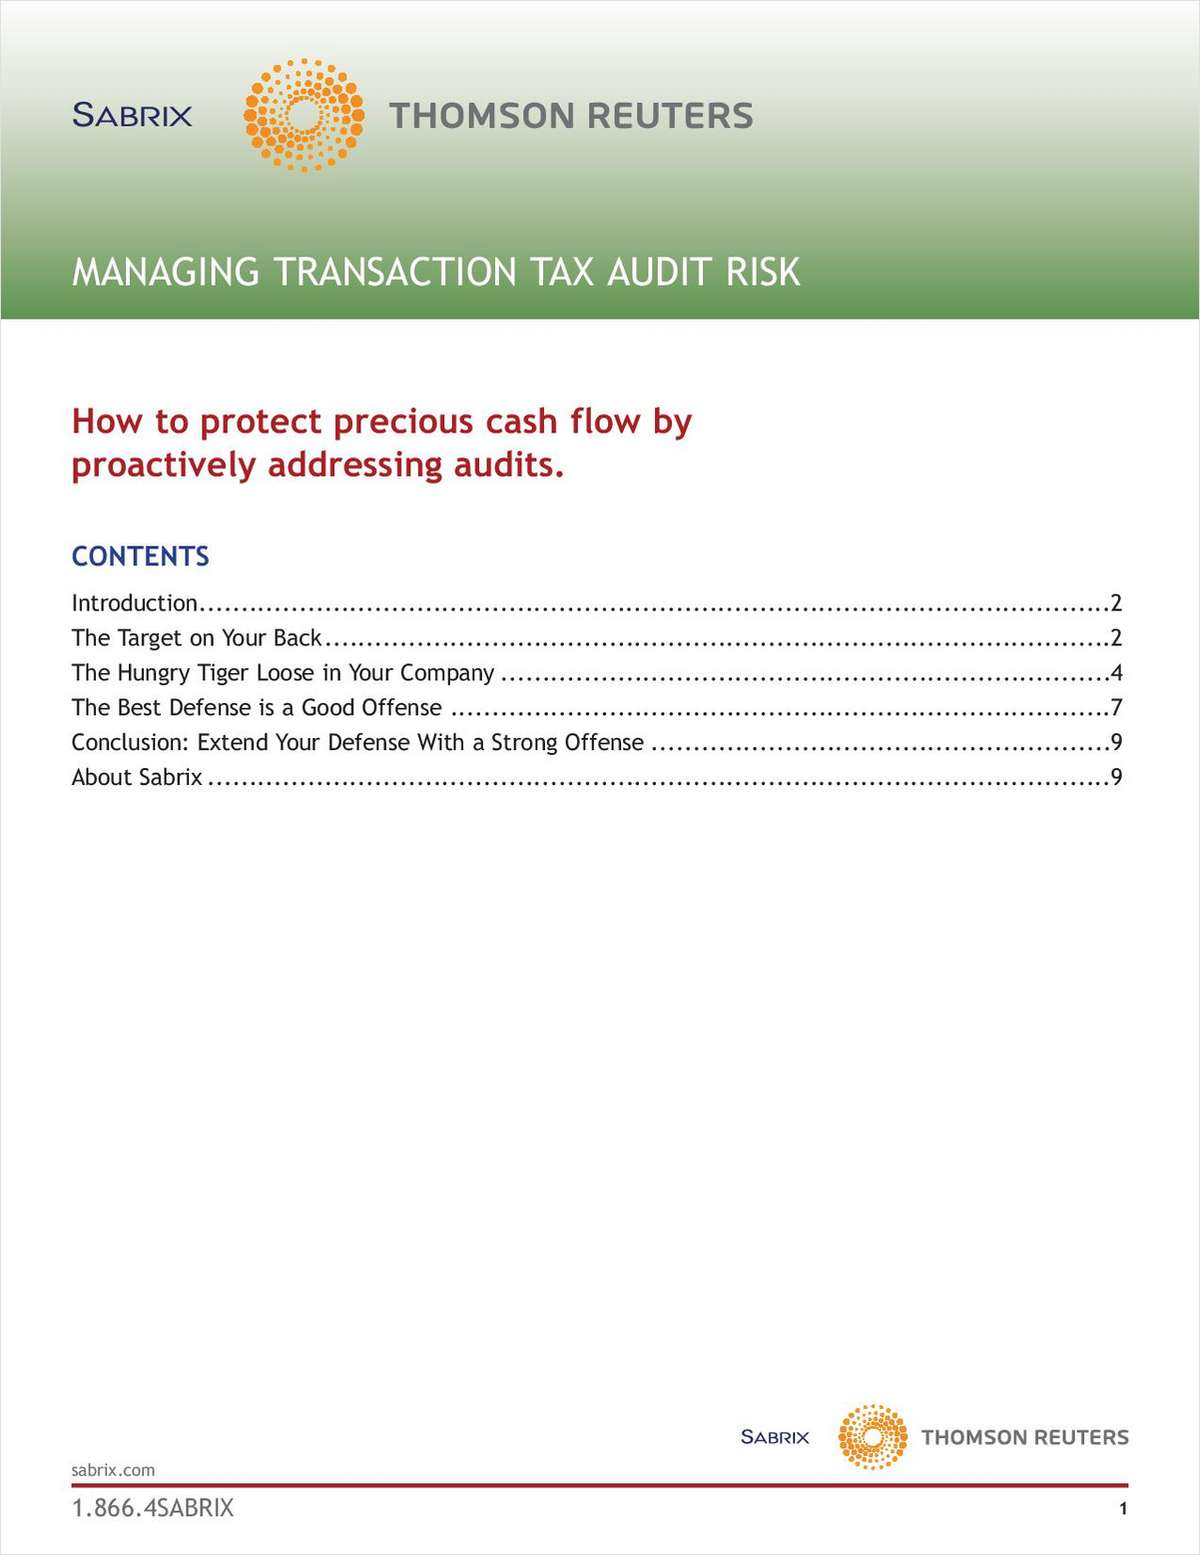 Managing Transaction Tax Audit Risk